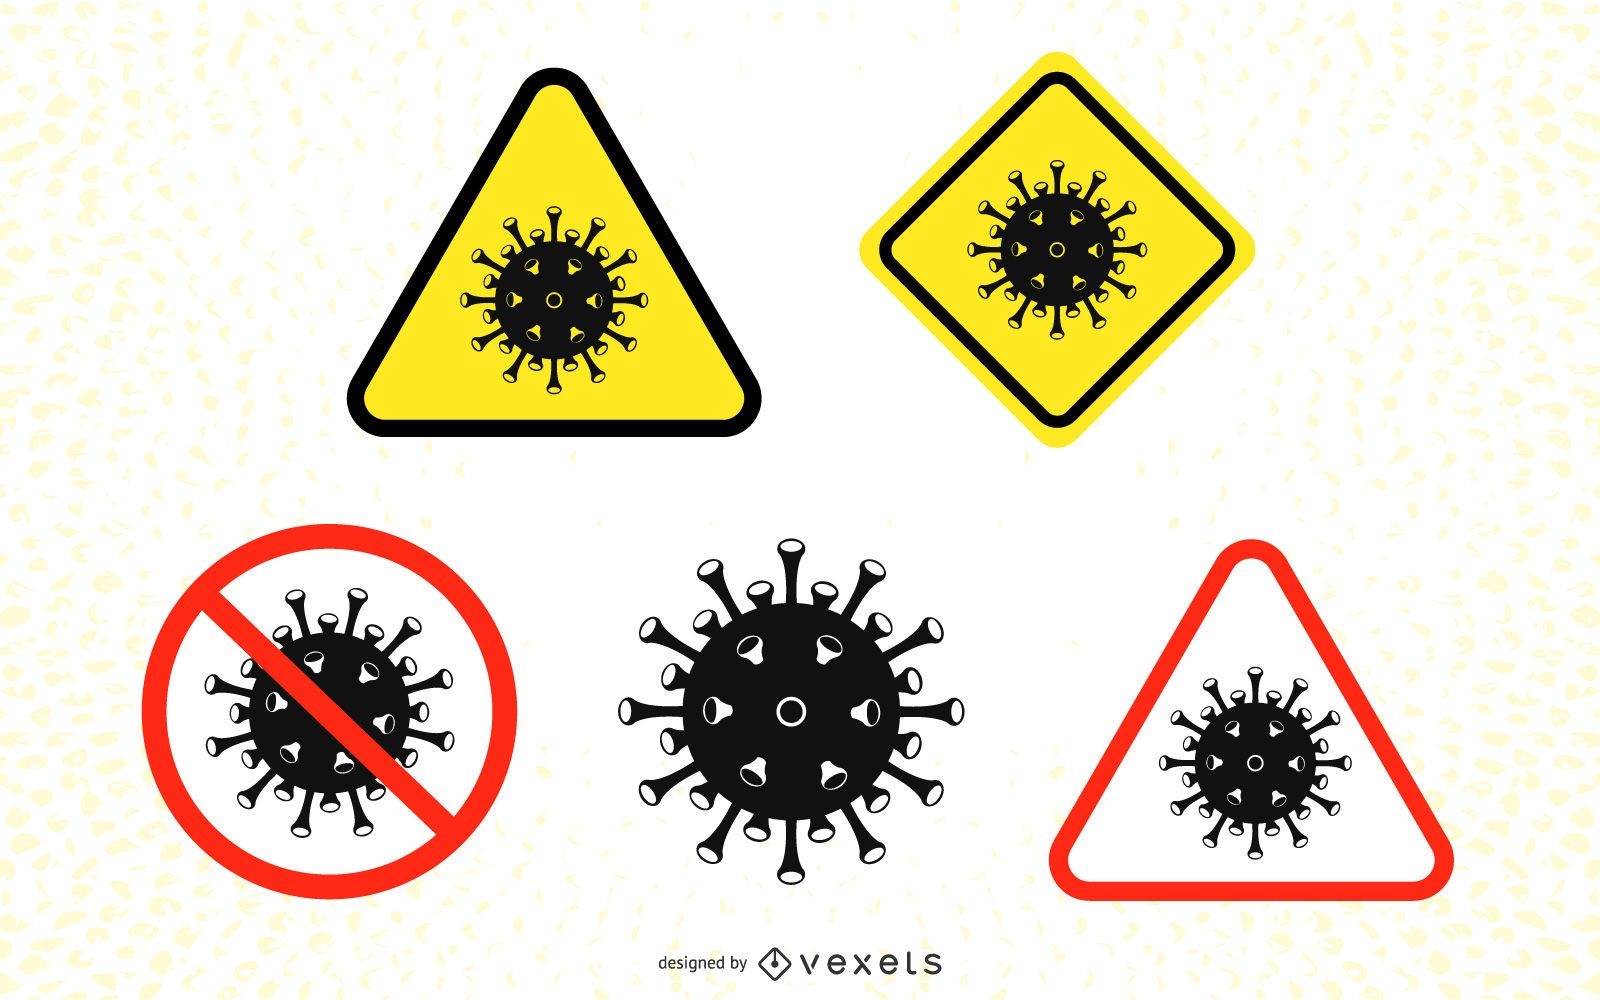 Coronavirus-Warnschilder gesetzt